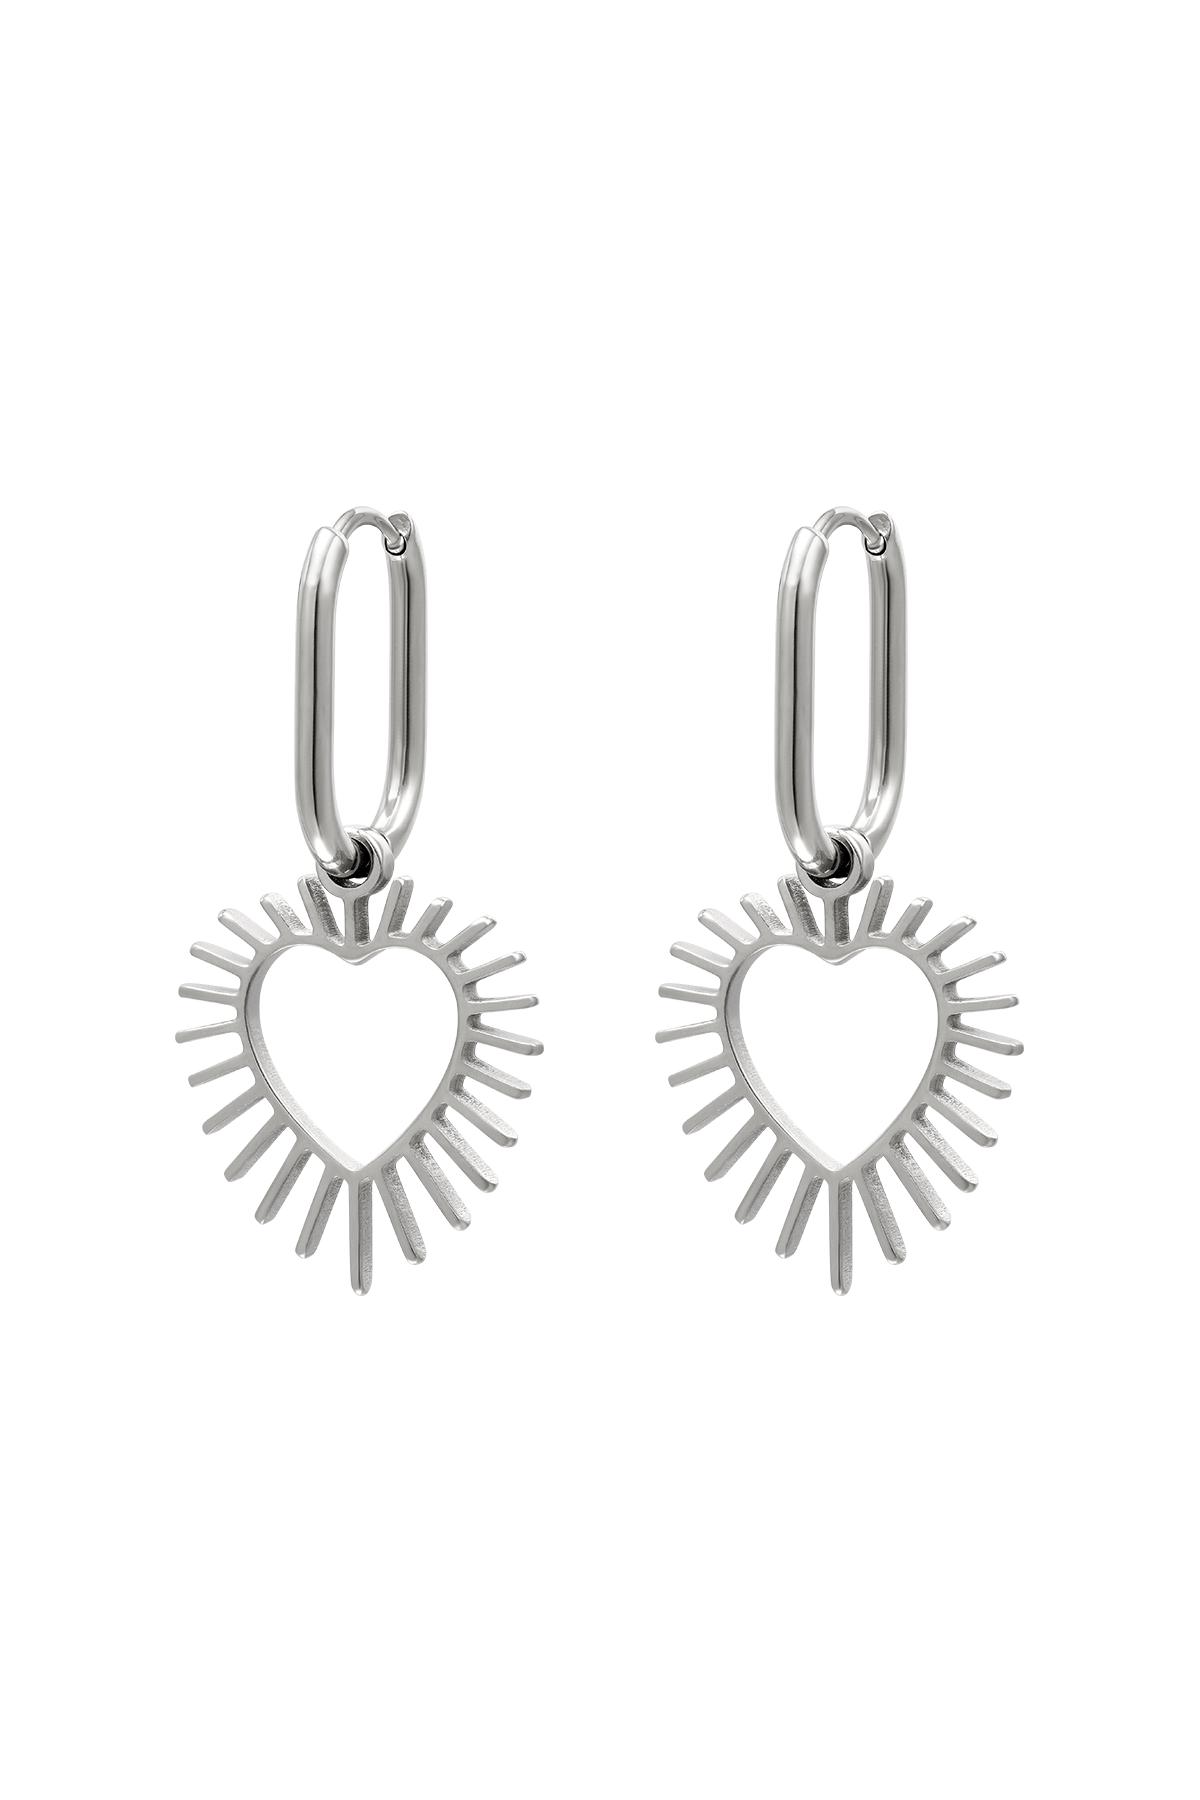 Stainless steel earrings radiant heart Silver Sheet Material